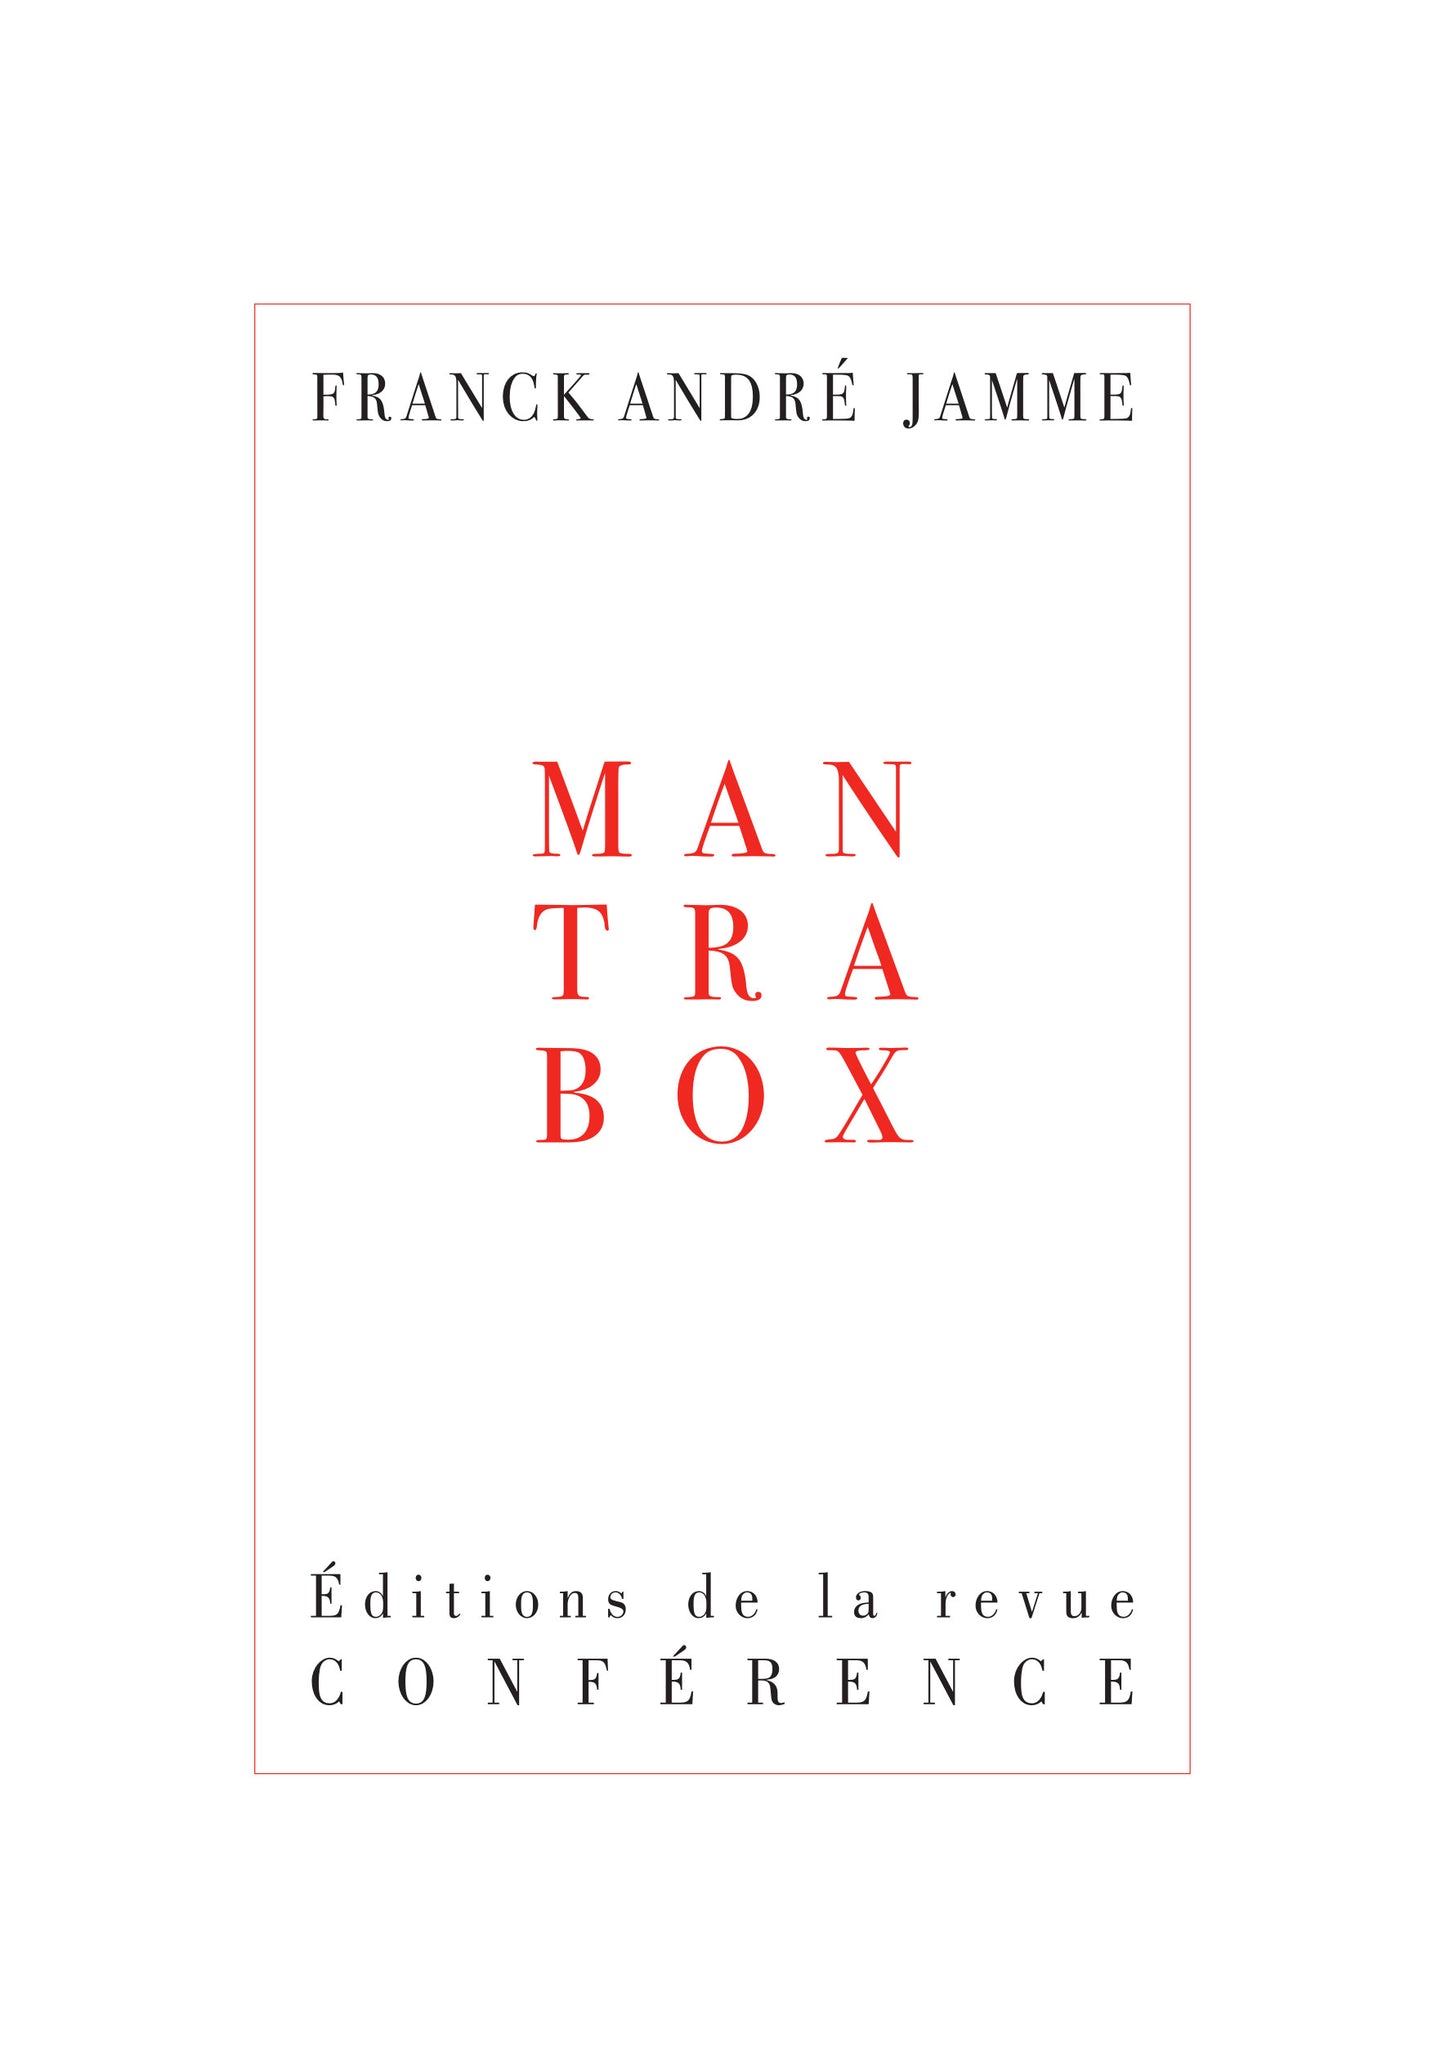 Mantra Box